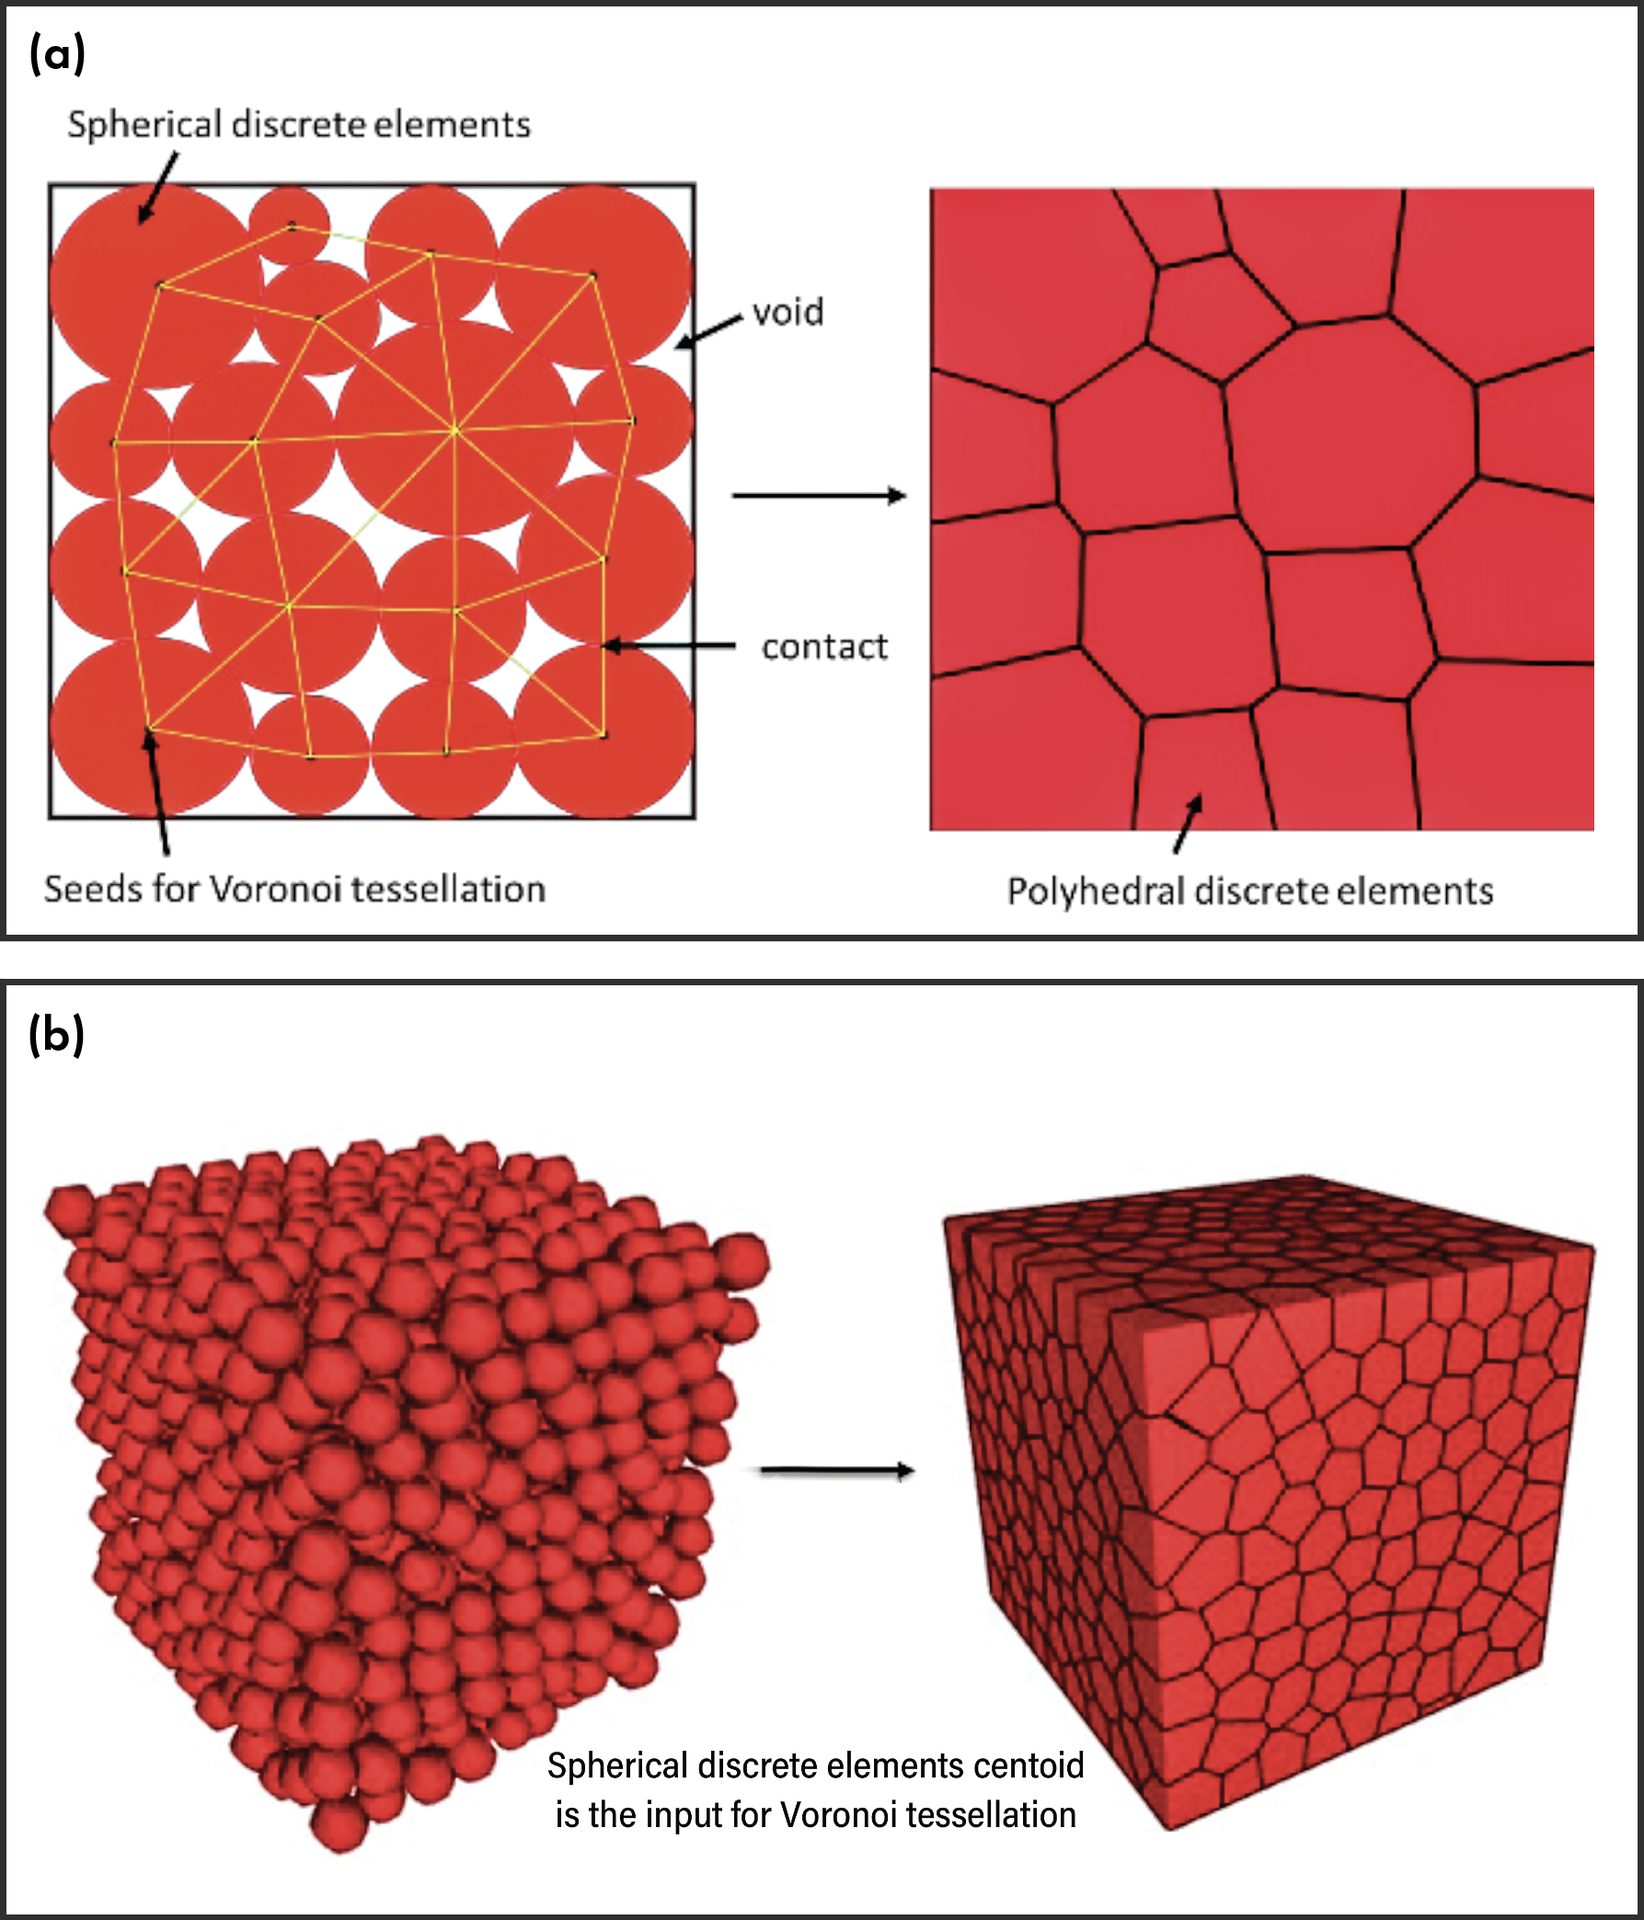 The Voronoi tessellation process